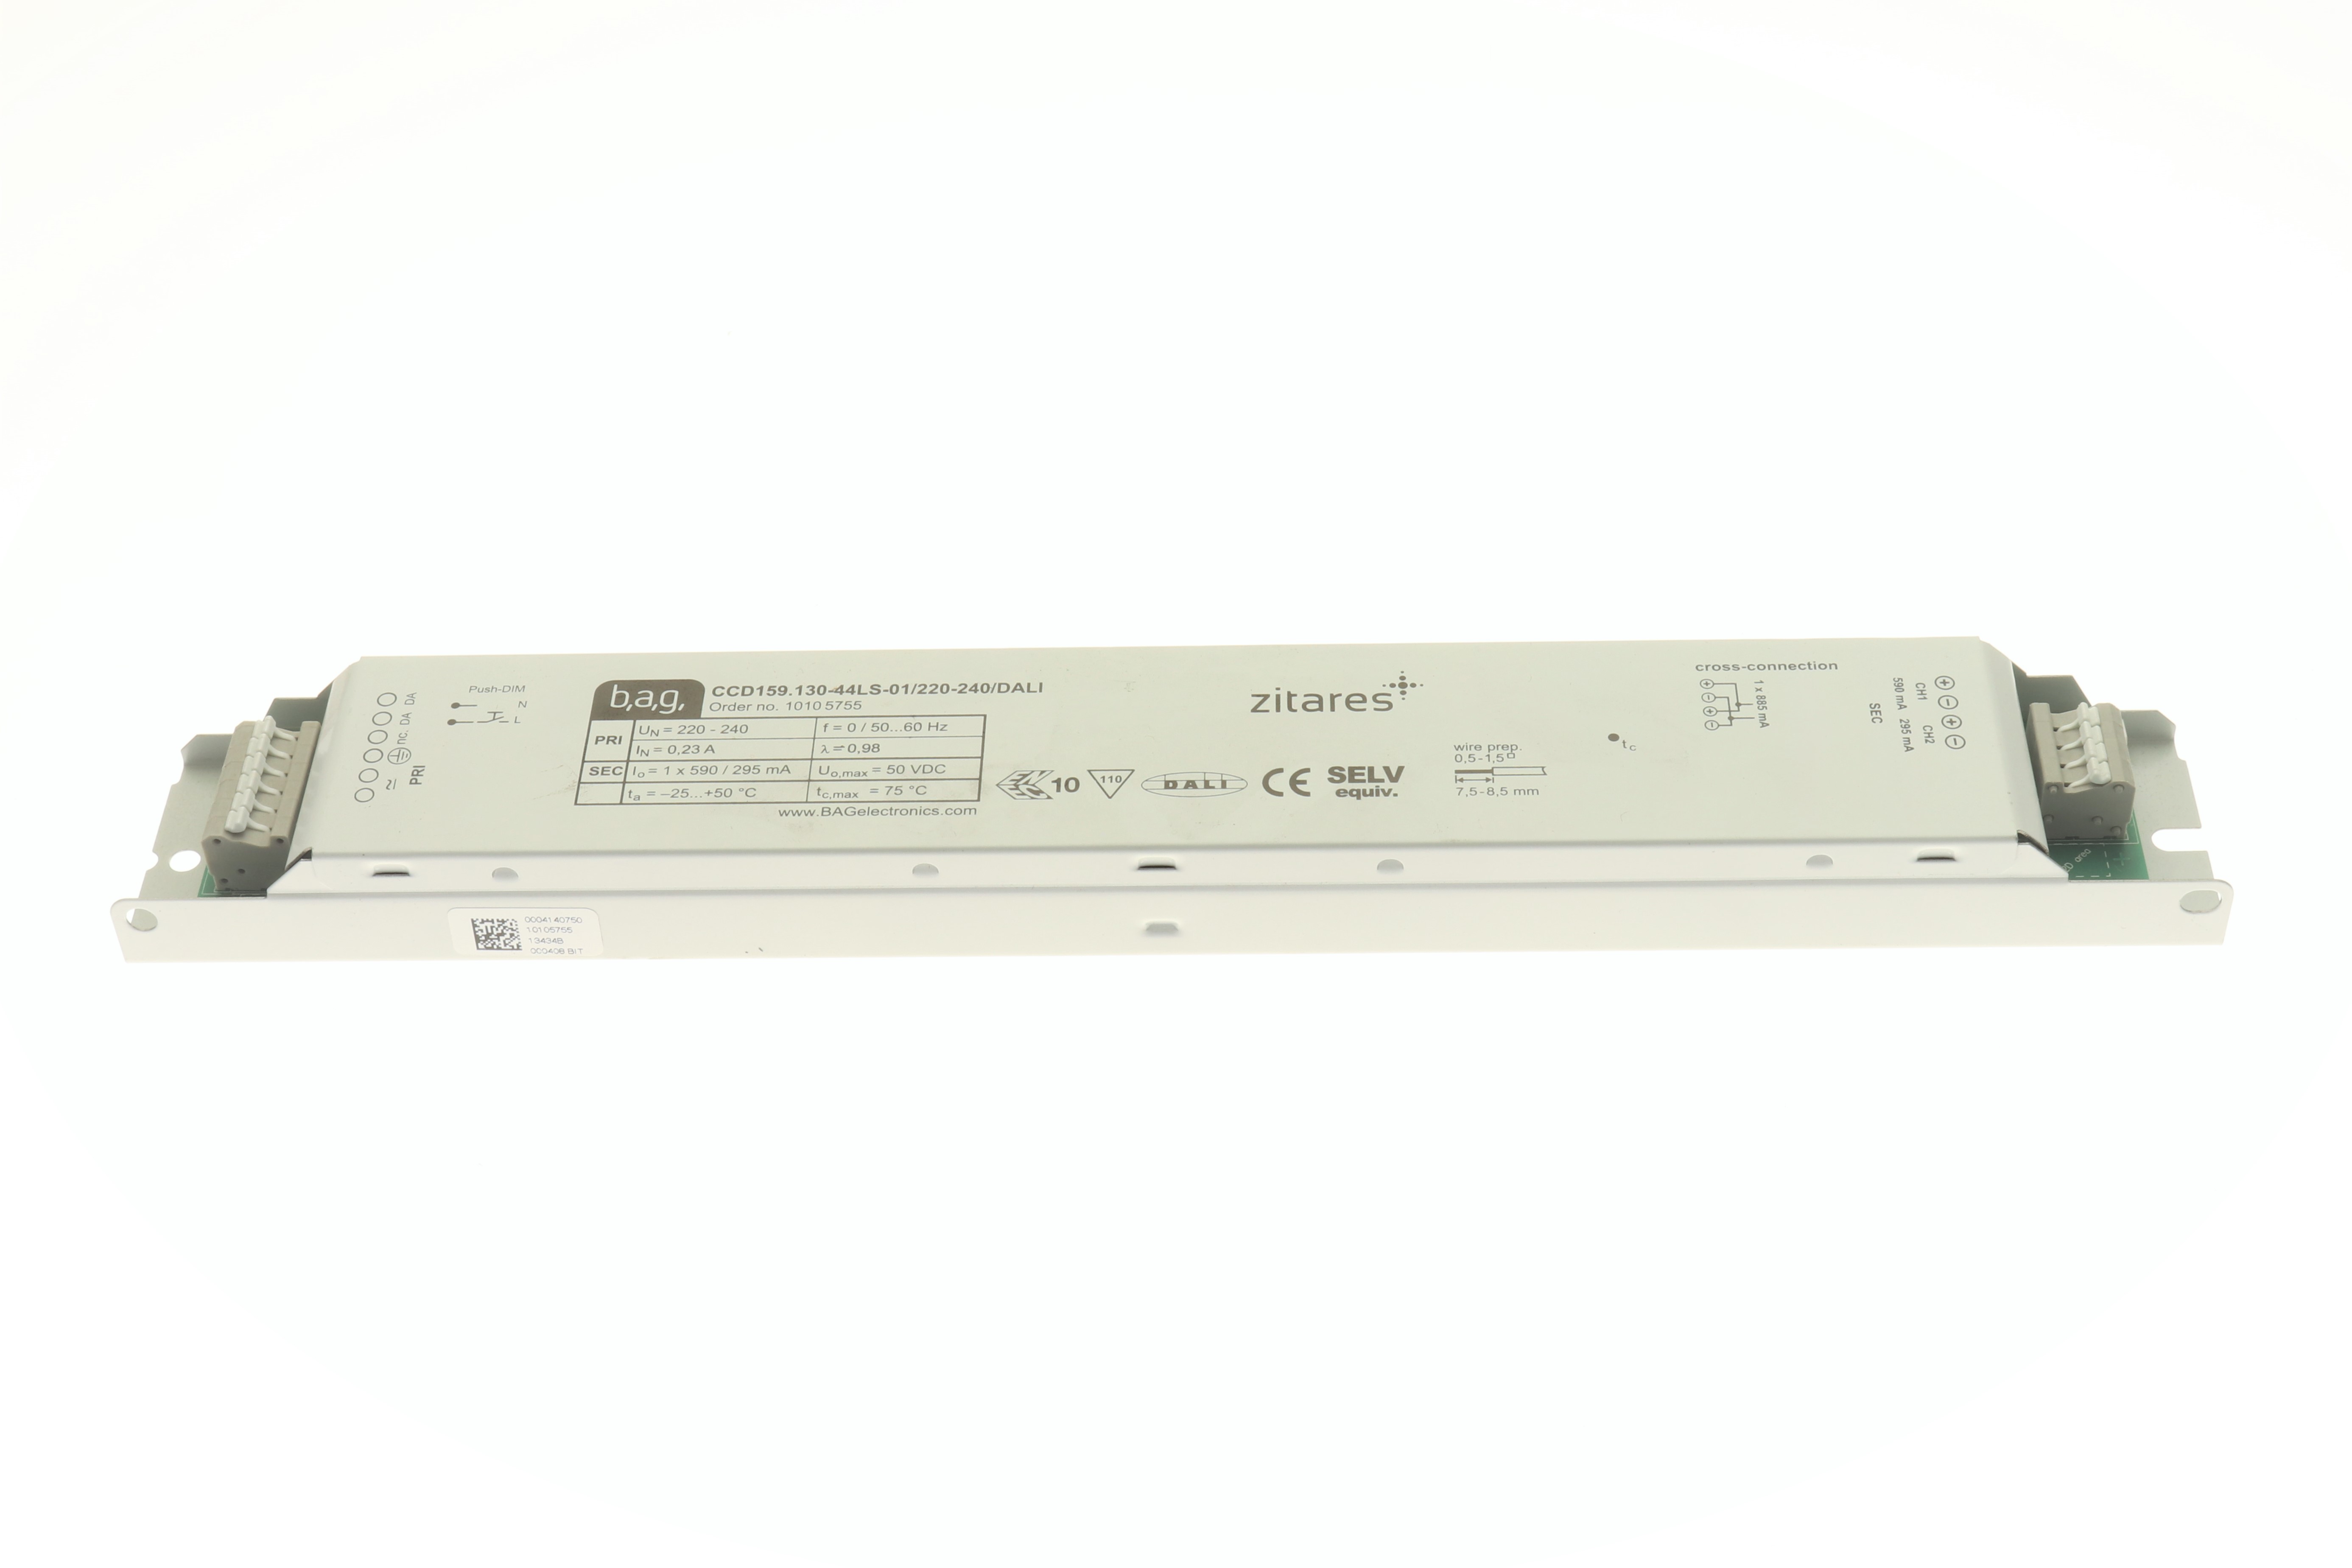 BAG Vorschaltgerät EVG für LED CCD159.130-44LS-01/220-240/DALI - 10105755